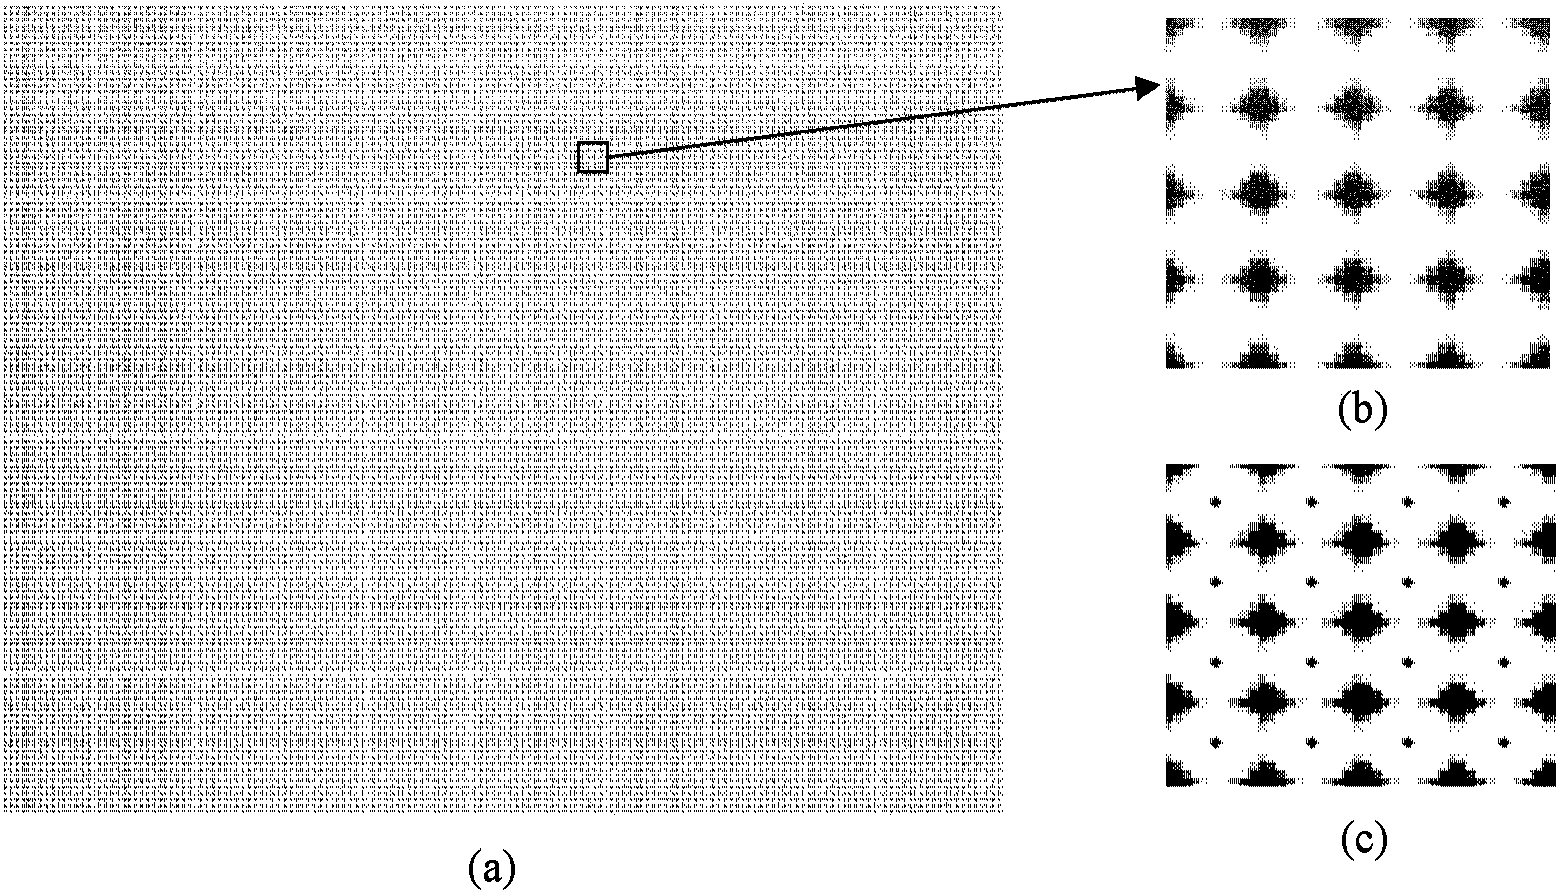 Four-dimensional light field decoding preprocessing method based on original image